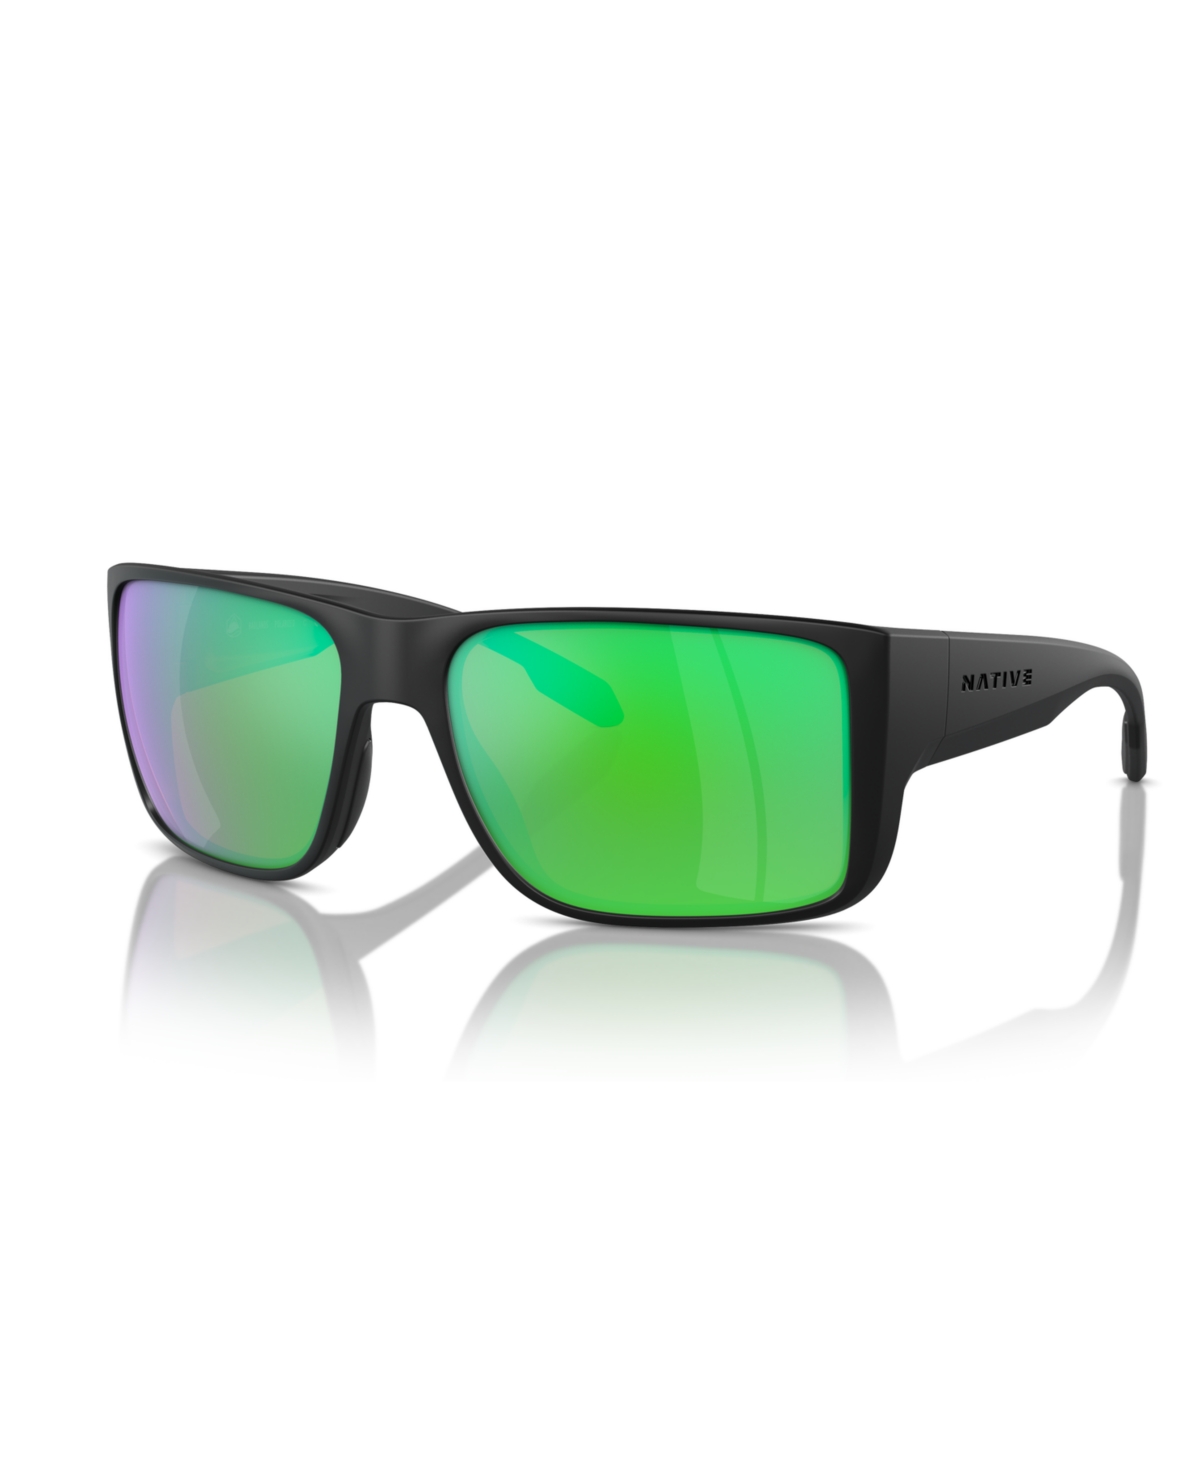 Men's Polarized Sunglasses, Badlands Xd9045 - Matte Black, Gray